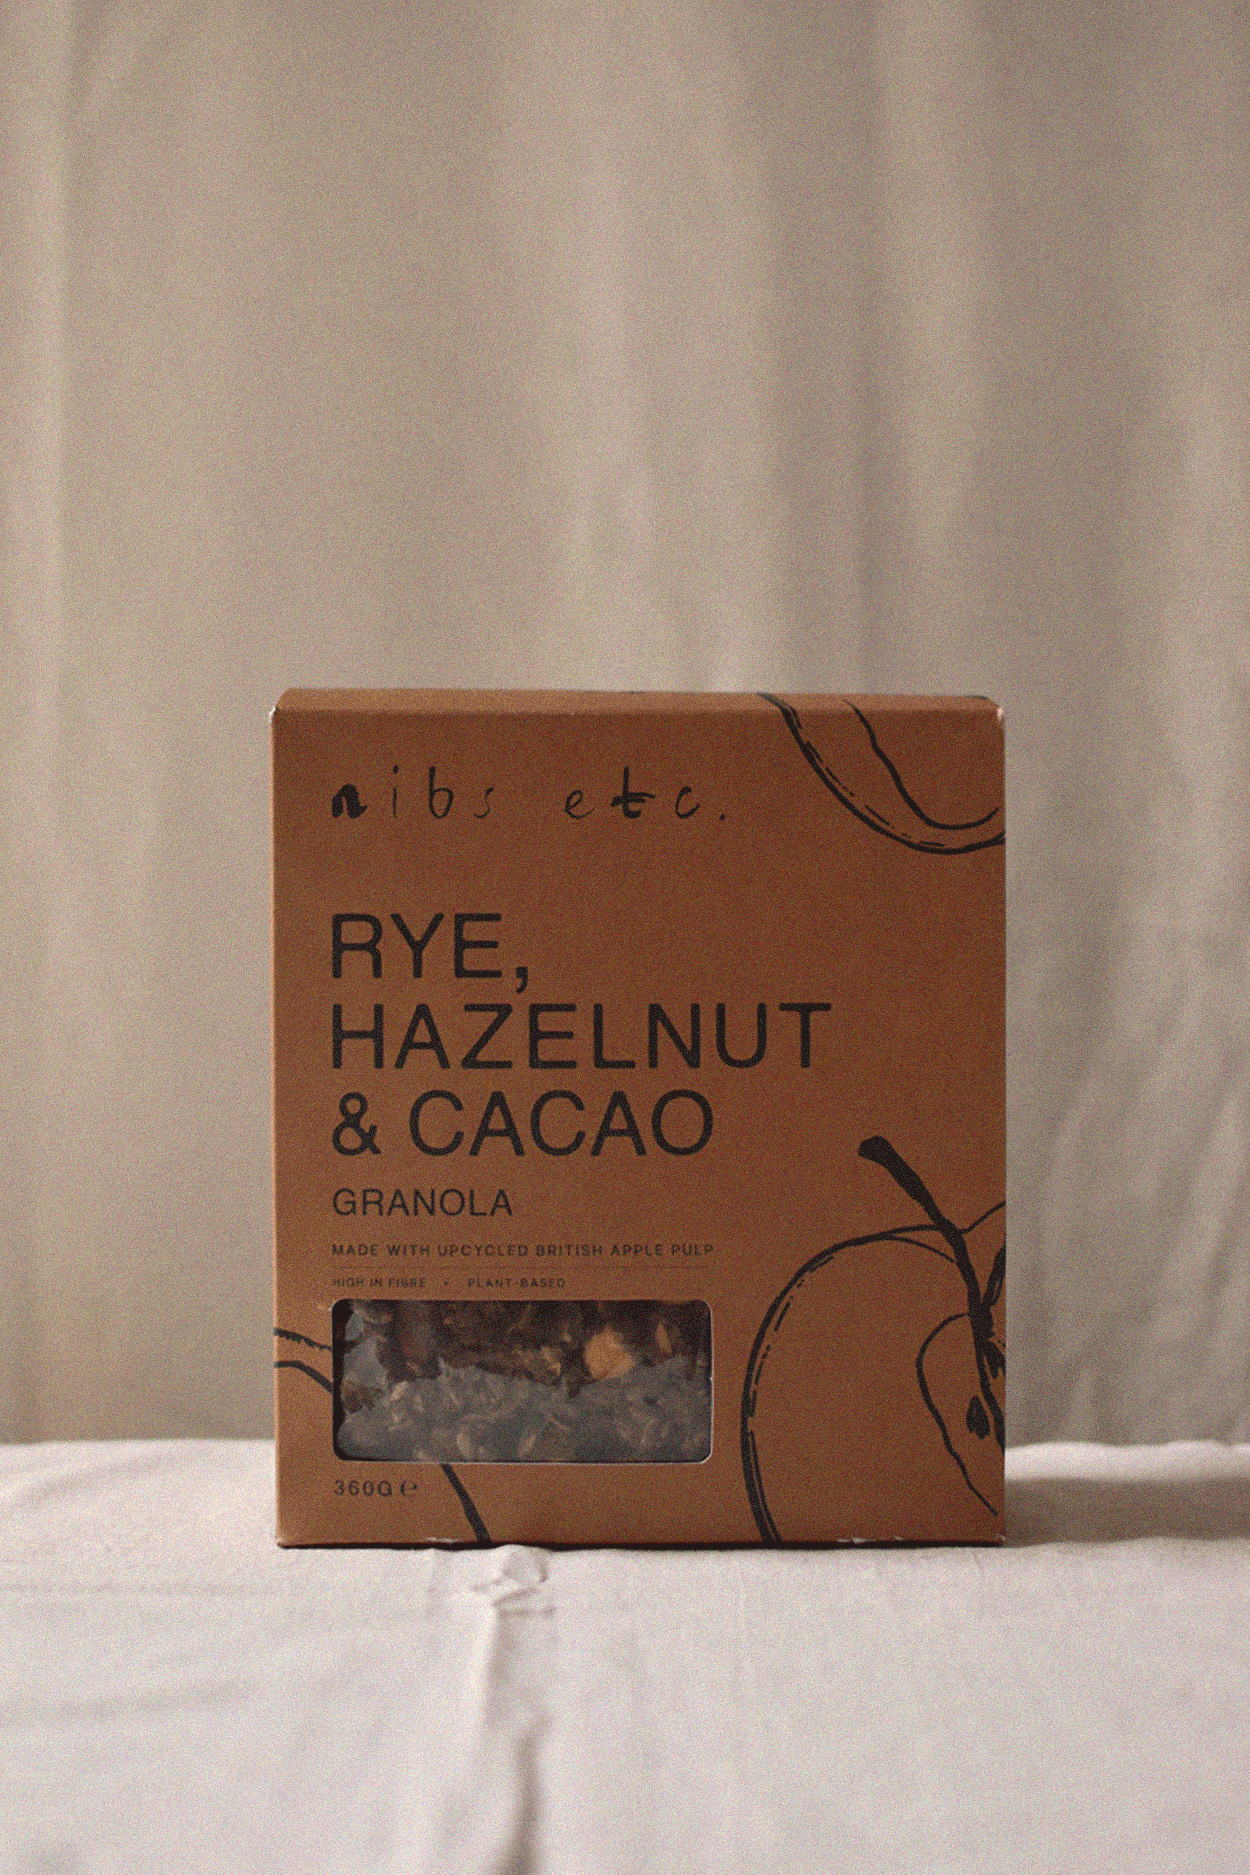 360g Rye, Hazelnut & Cacao Granola